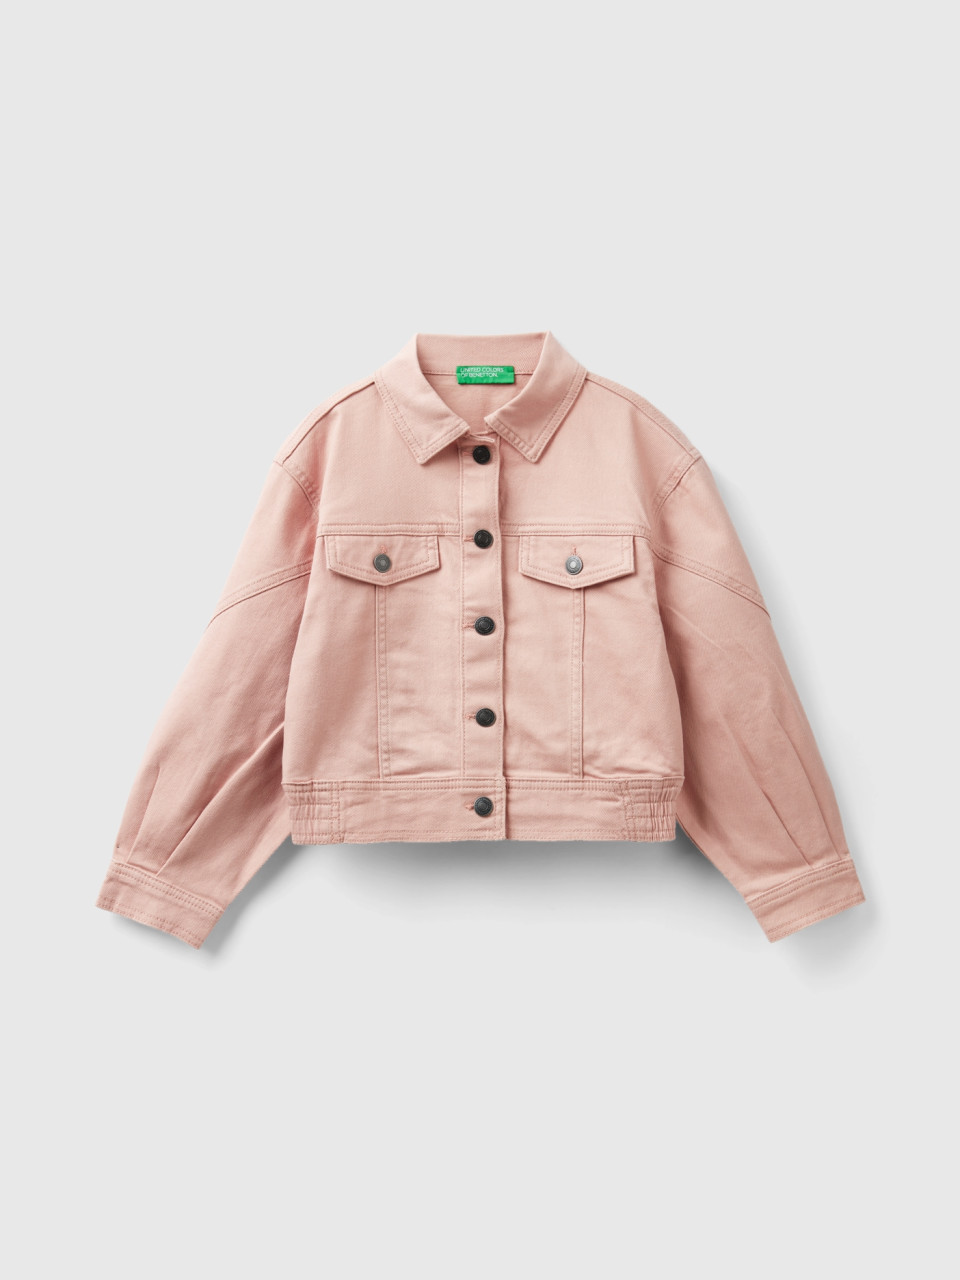 Benetton, Colorful Stretch Cotton Jacket, Pastel Pink, Kids